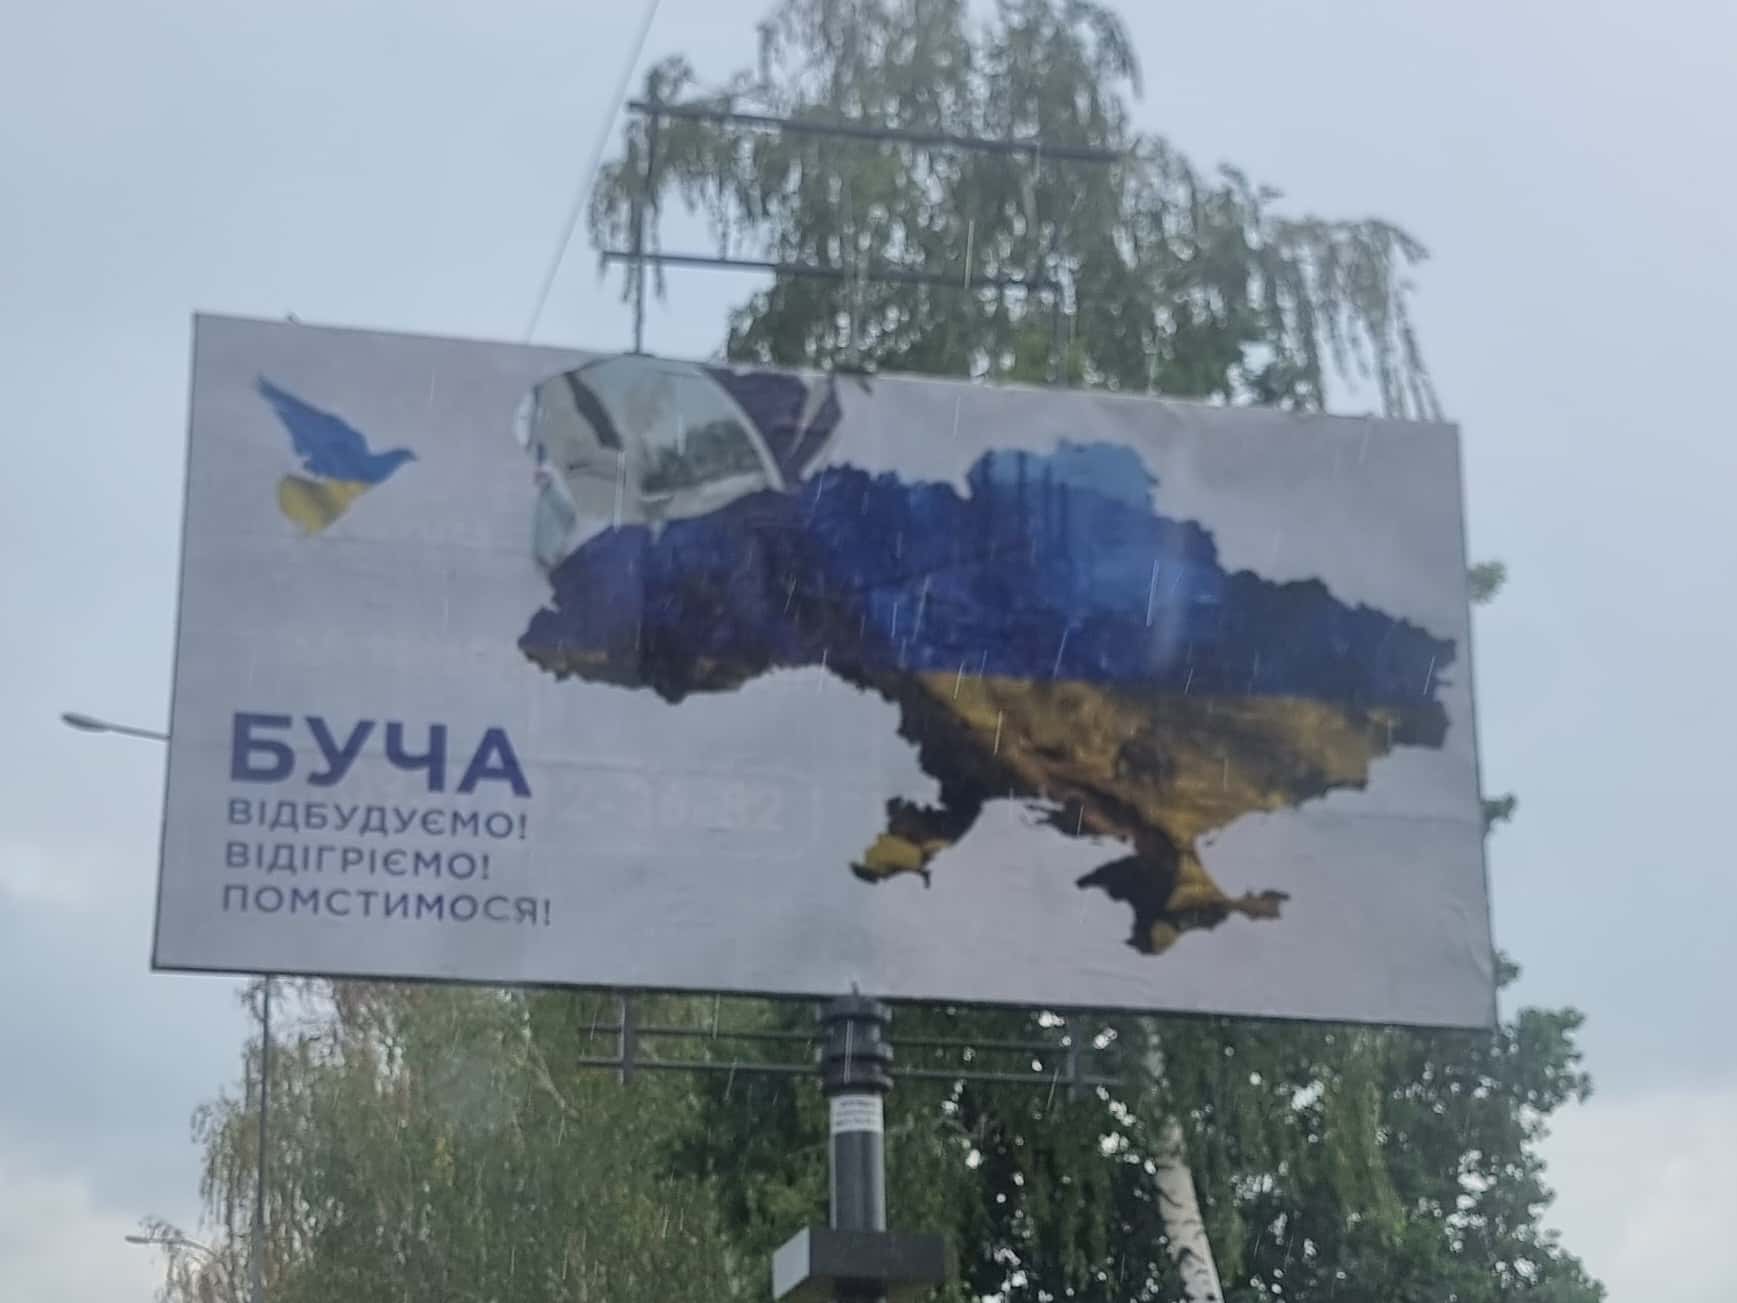 A billboard in Bucha